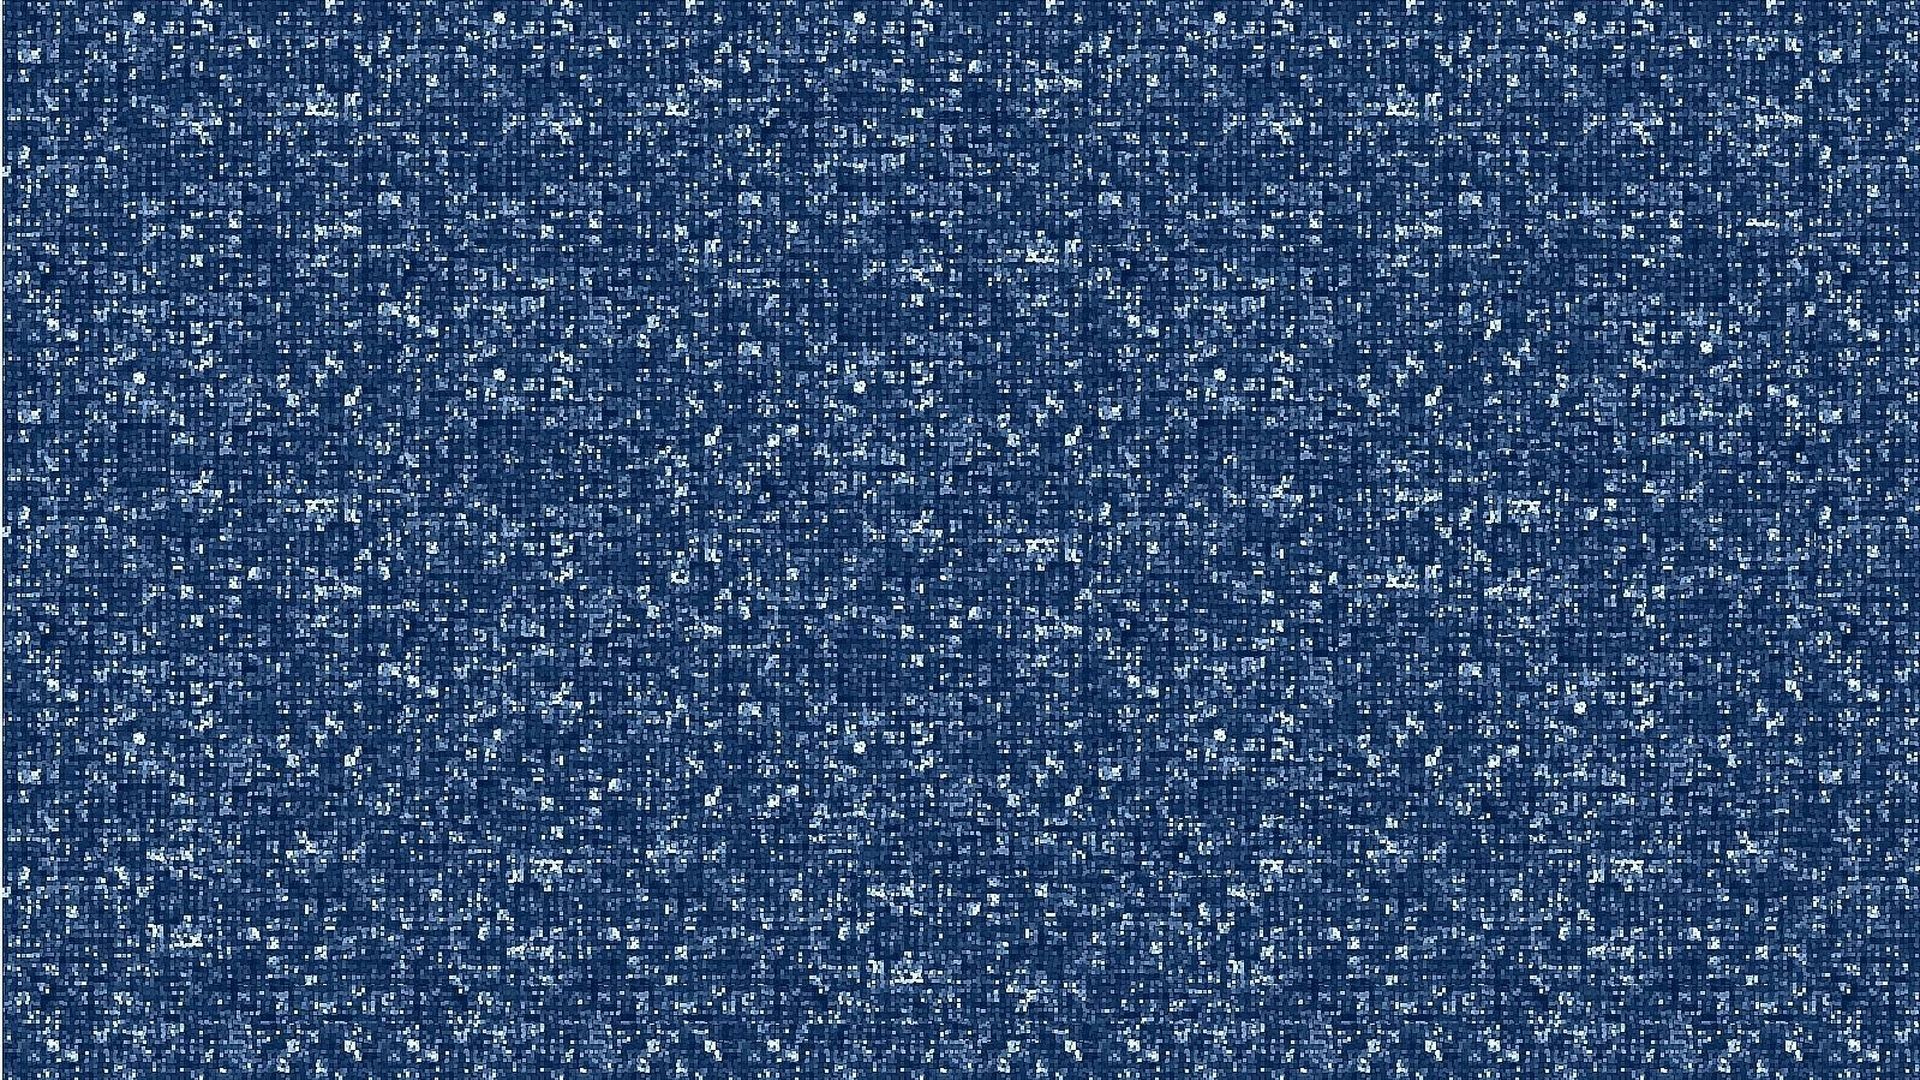 General 1920x1080 abstract pattern blue digital art